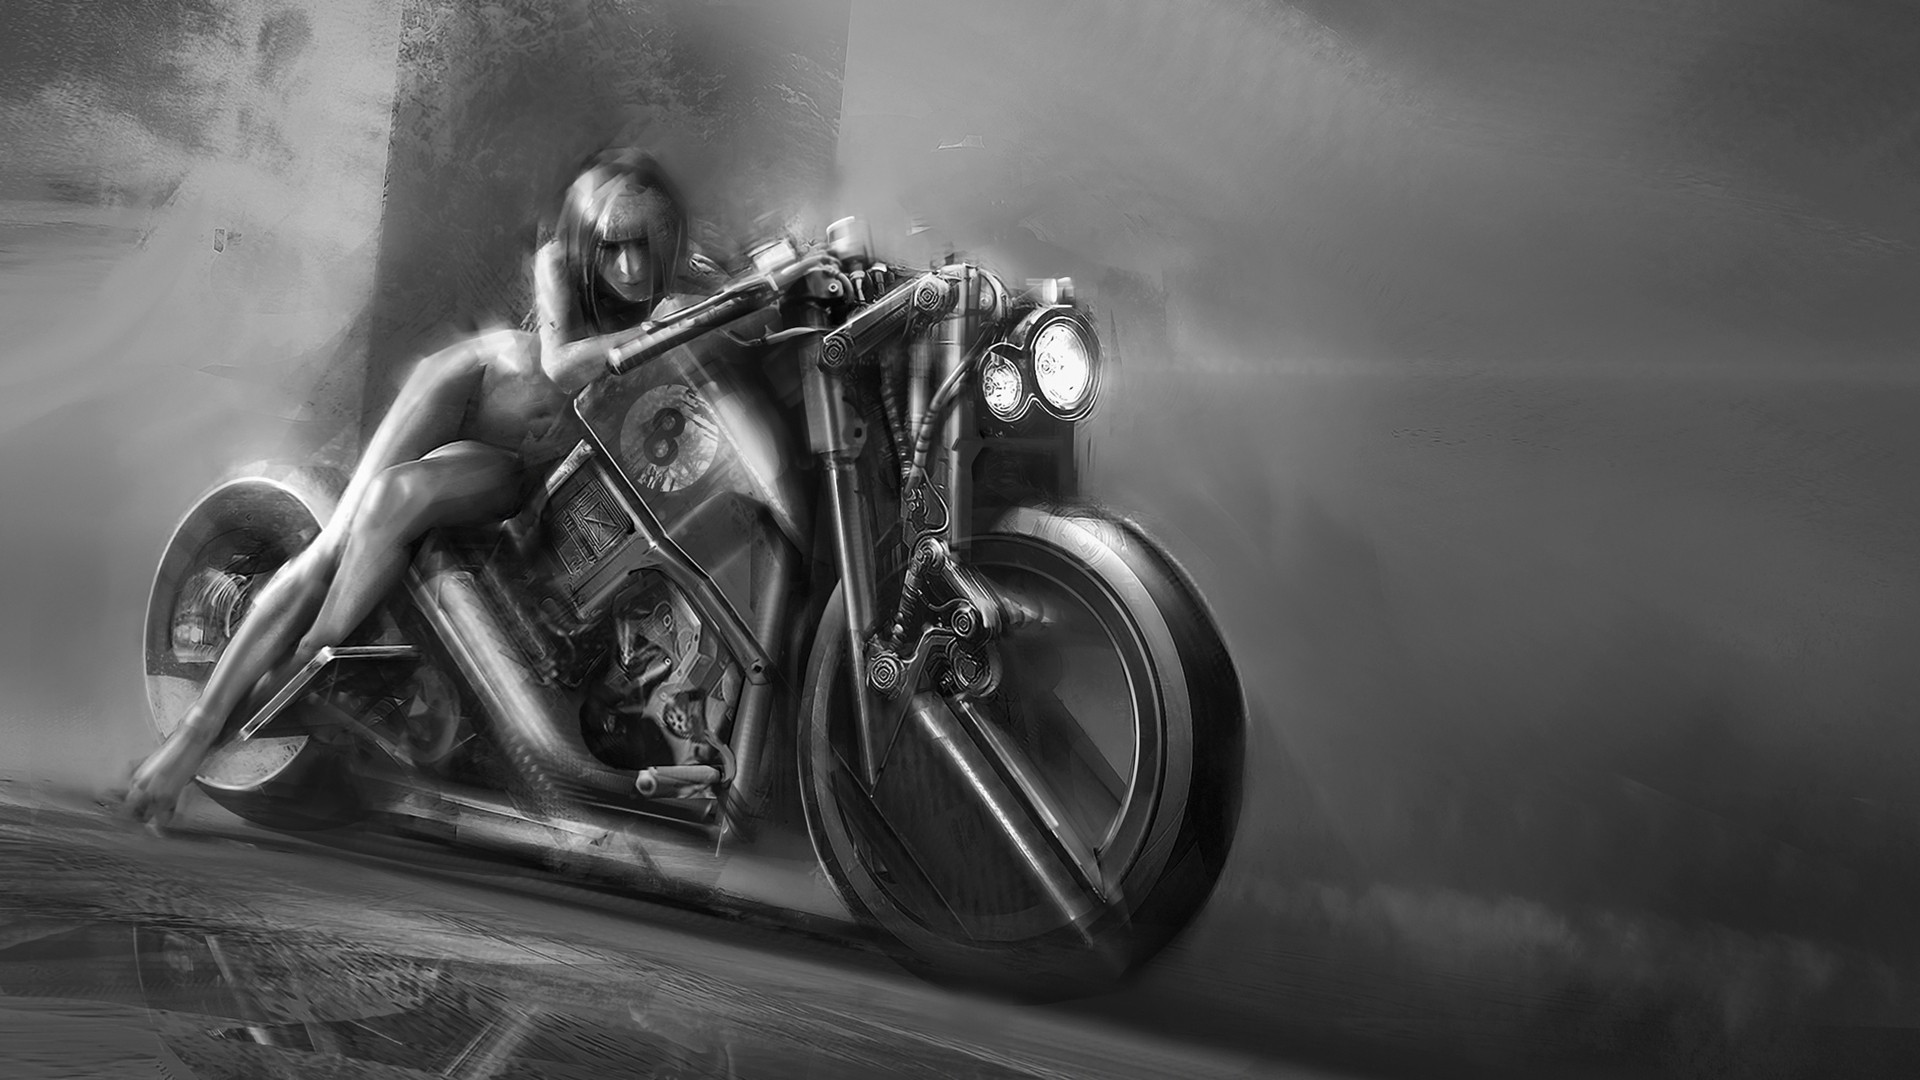 General 1920x1080 artwork erotic art  women nude motorcycle vehicle women with motorcycles monochrome